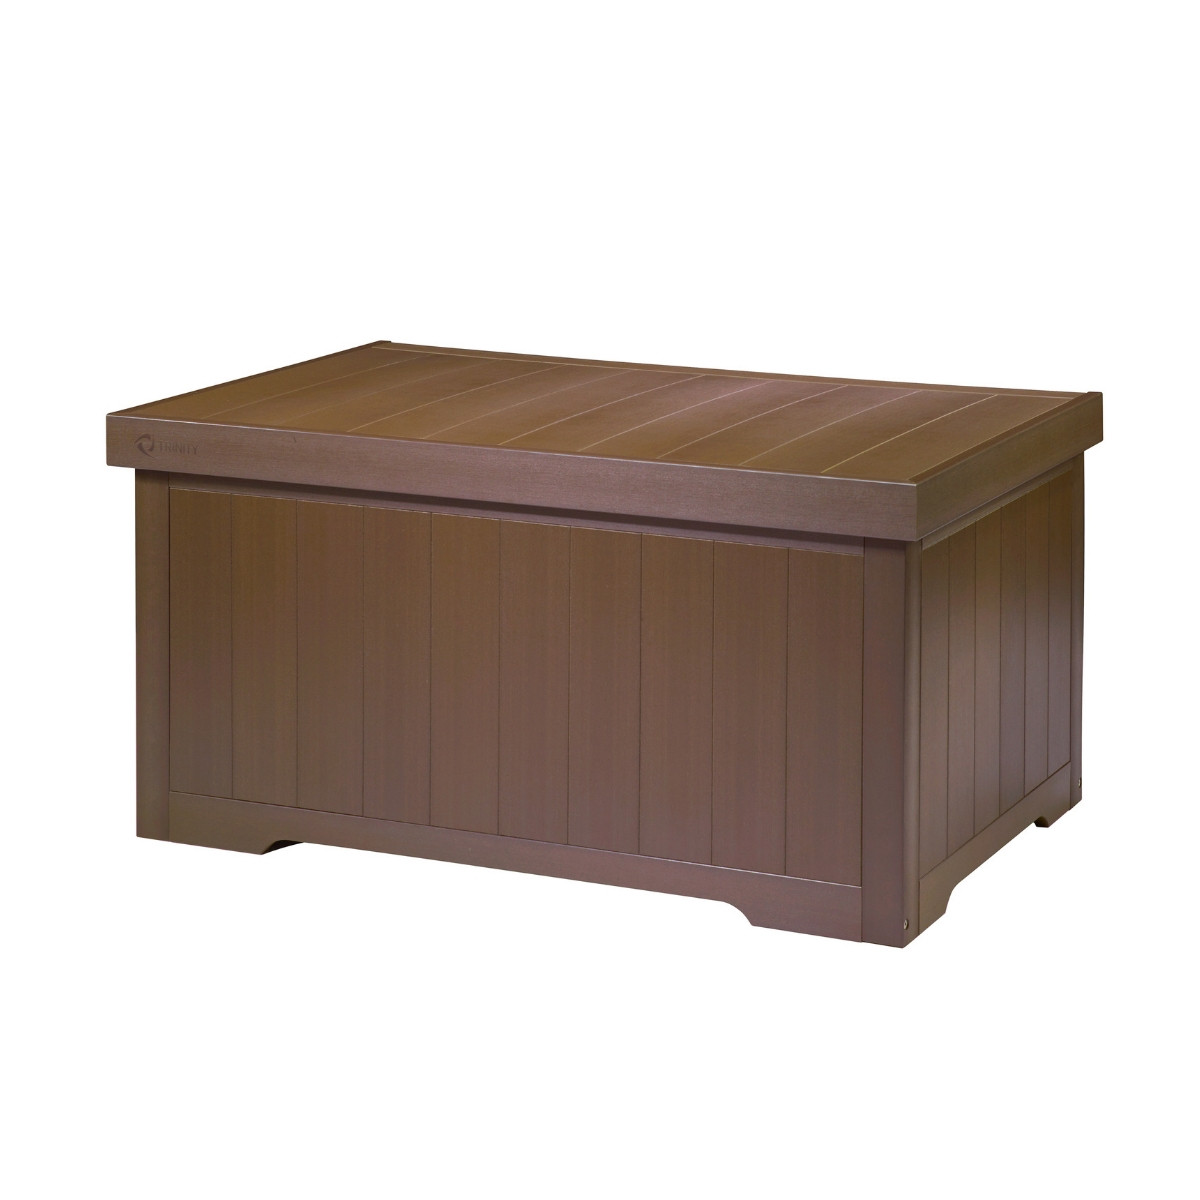 Thbbr-3108 70 Gal Ecostorage Outdoor Deck Box, Espresso Brown - 21 X 42 X 26.5 In.